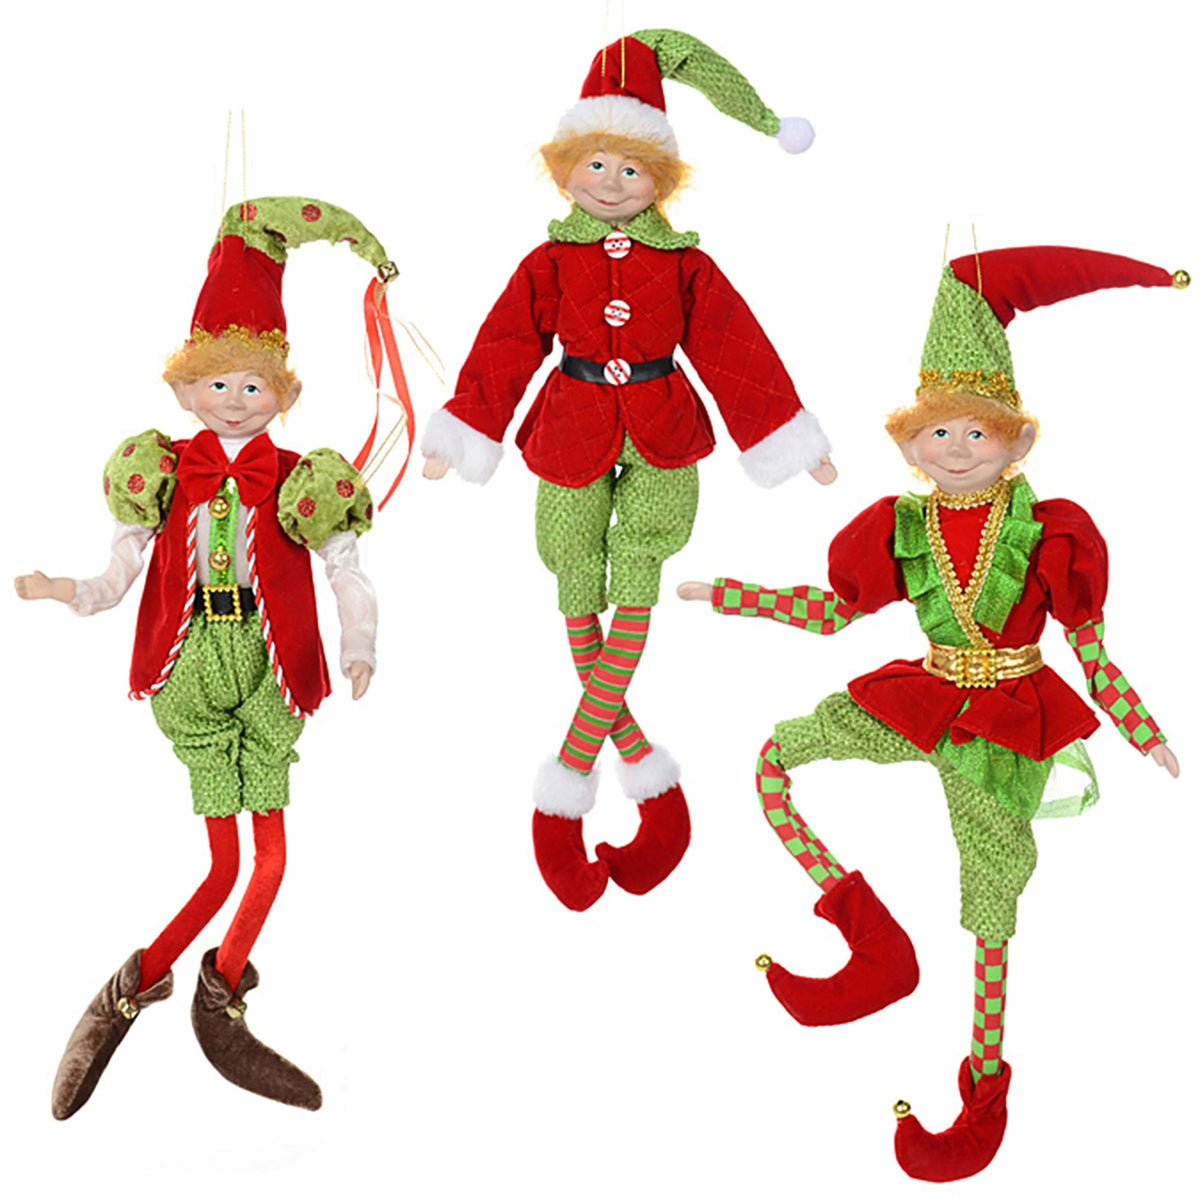 DANSON DECOR Christmas Flexible Elf, 21 Inches, Assortment, 1 Count 062615949068